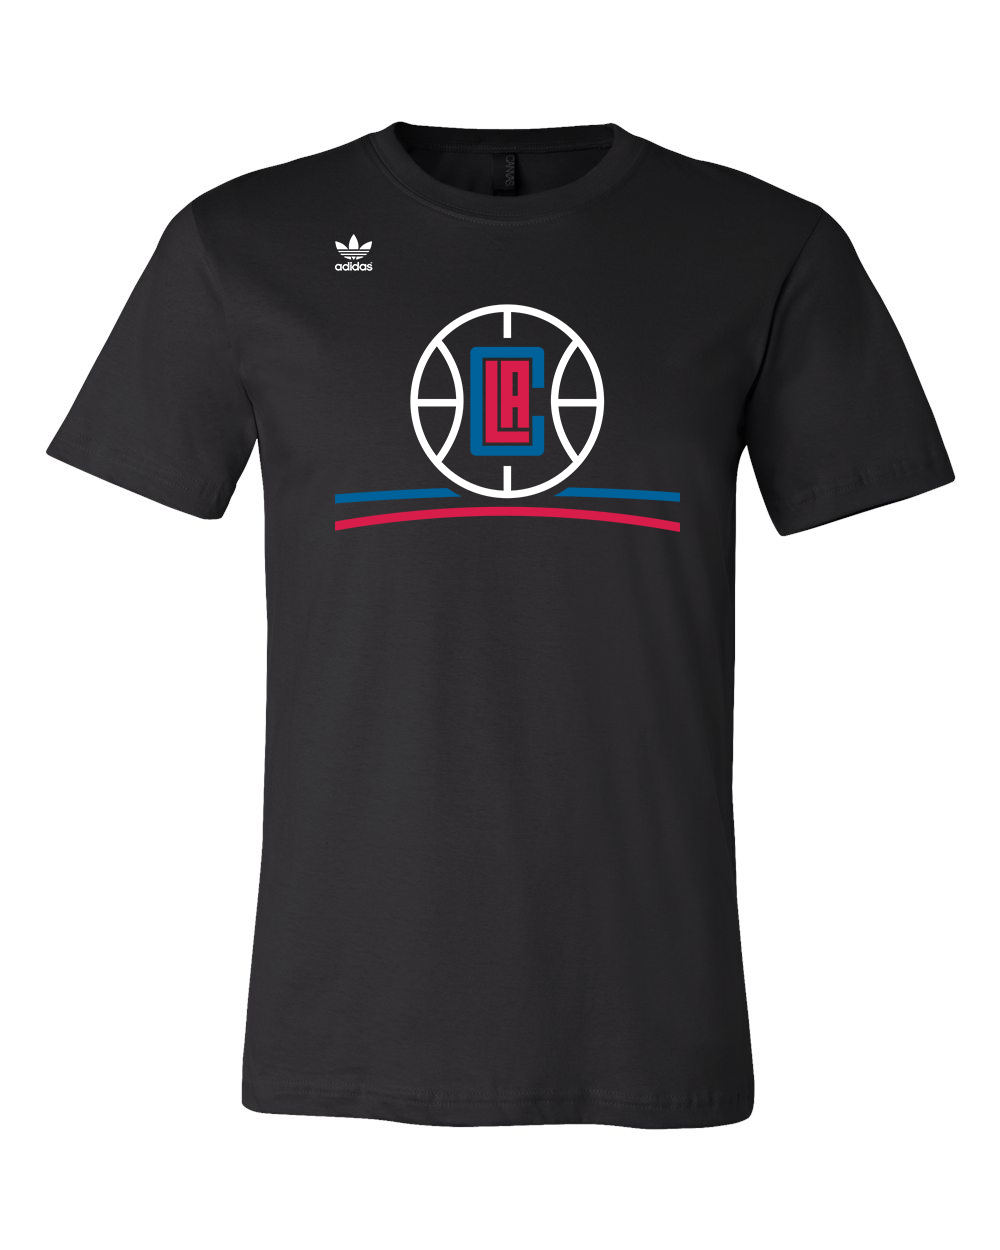 Los Angeles Clippers Alternate Logo Team Shirt NBA jersey shirt